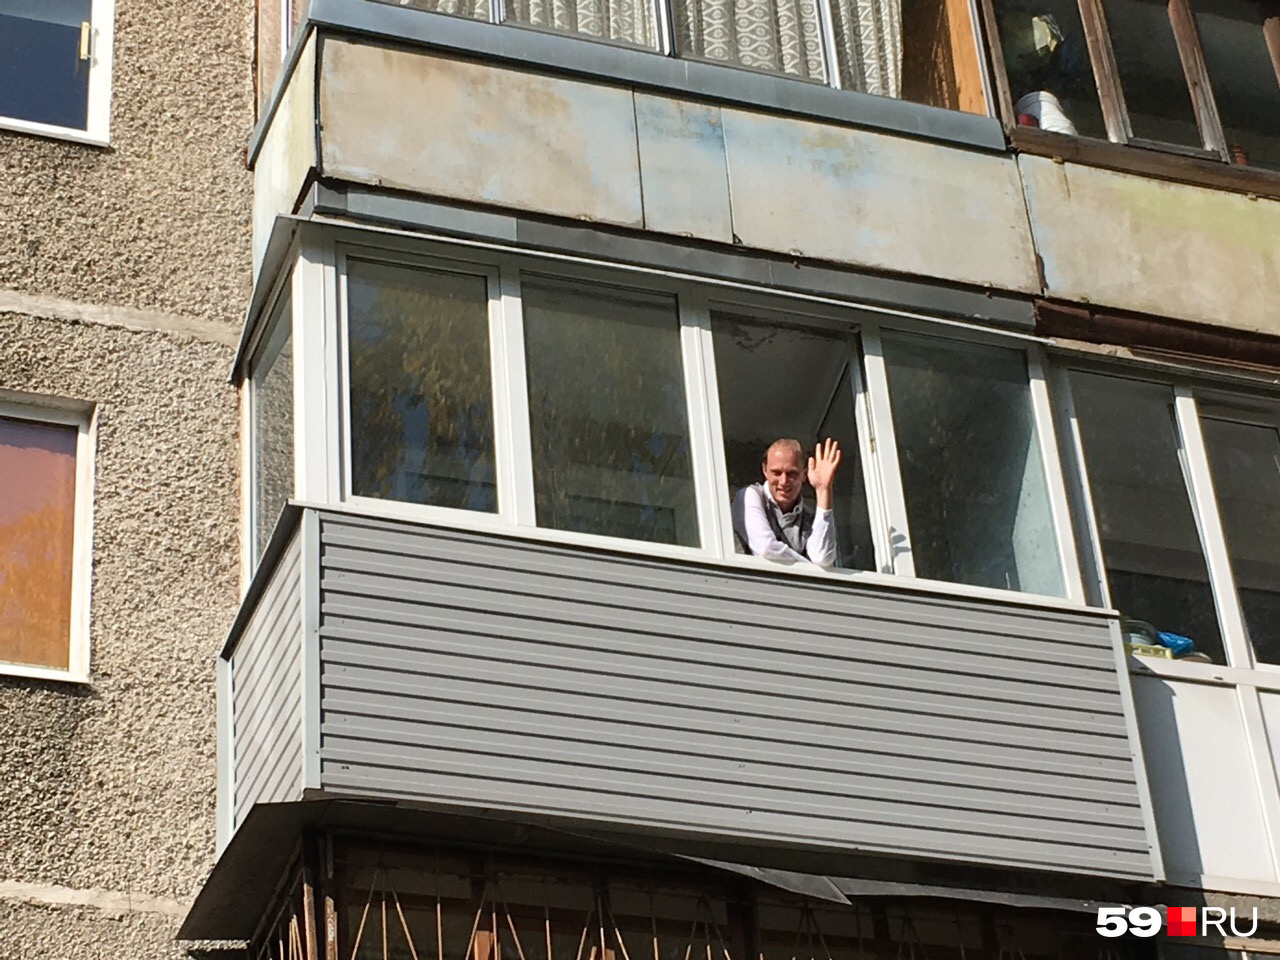 Выставил на балкон. Человек на балконе. Лоджия люди. Человек стоящий на балконе. Ломаная лоджия.